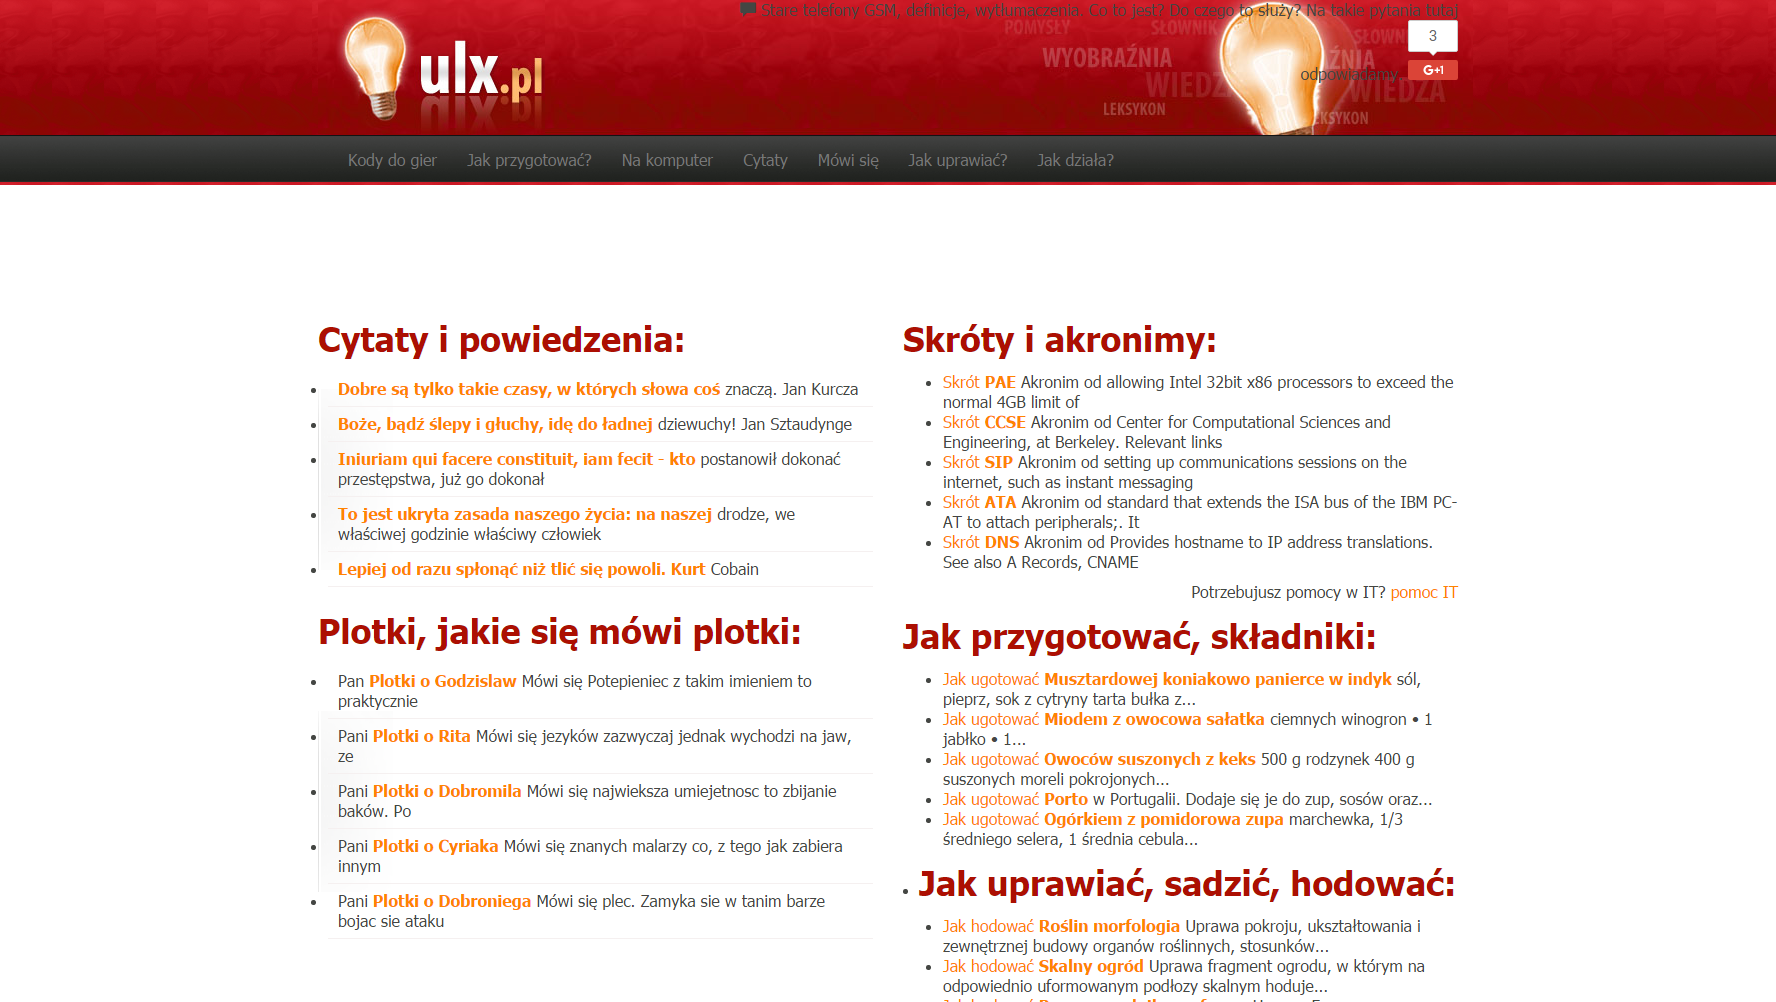 Project ULX.pl